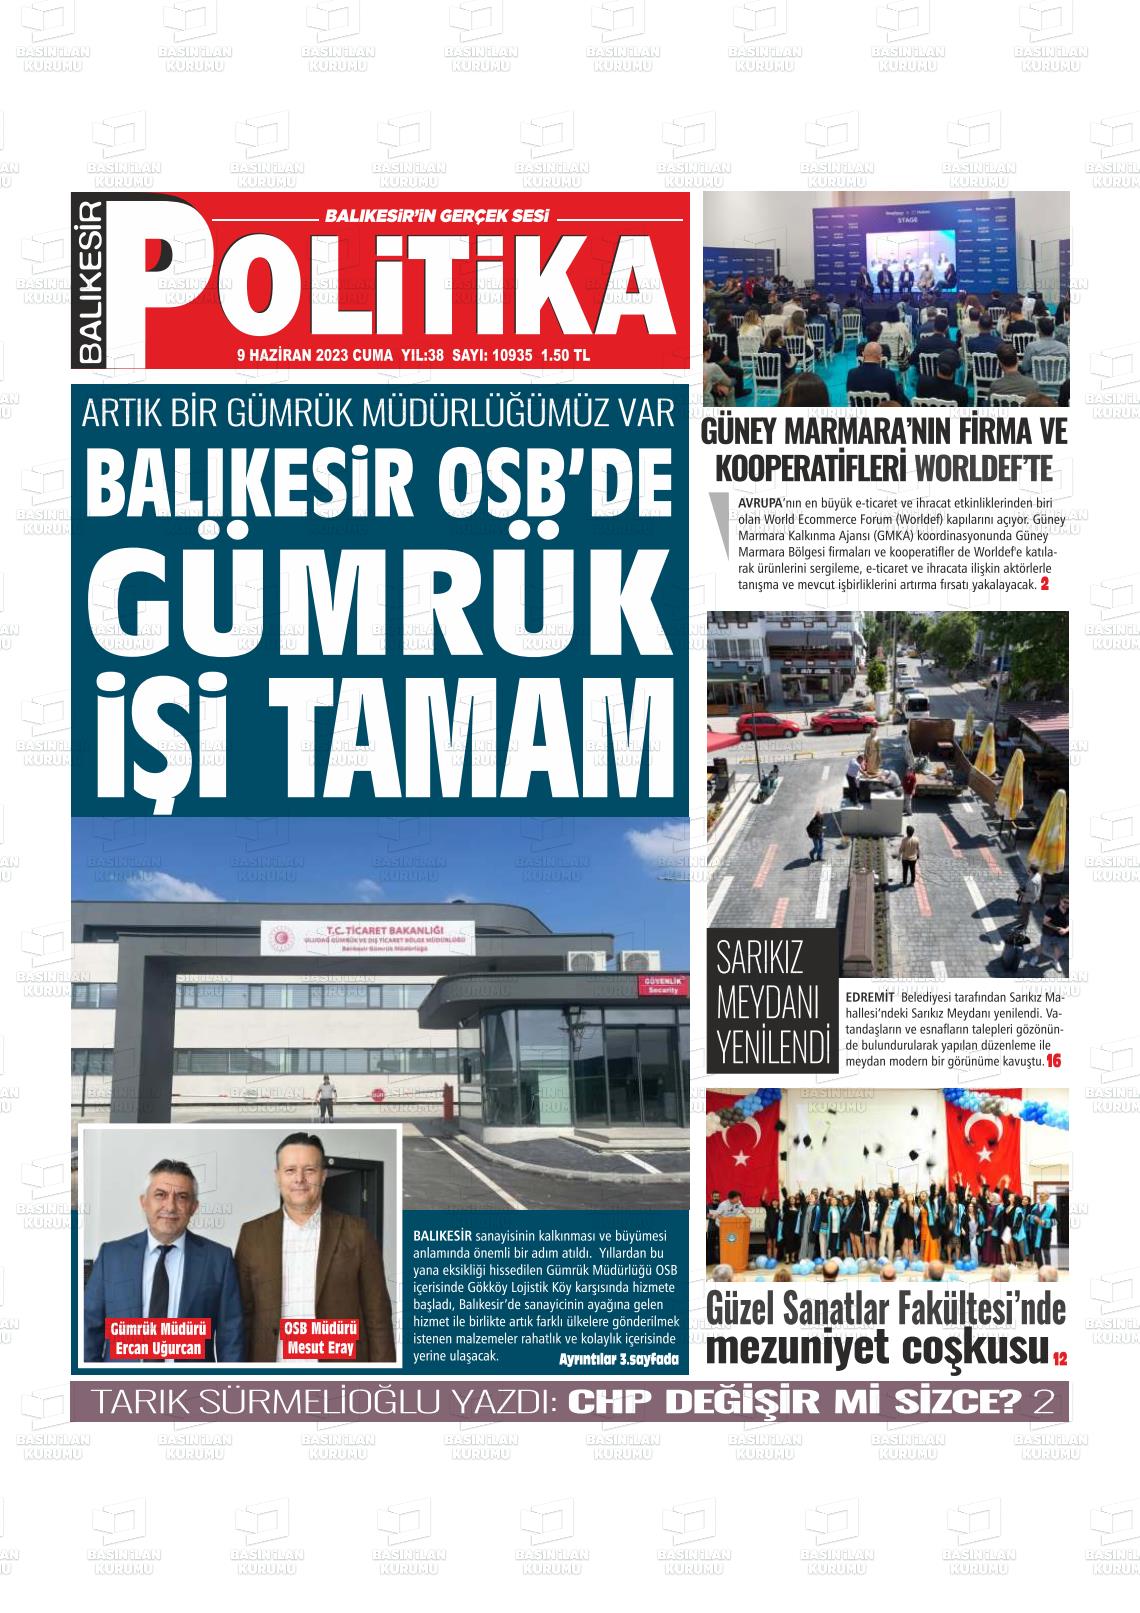 10 Haziran 2023 Balıkesir Politika Gazete Manşeti